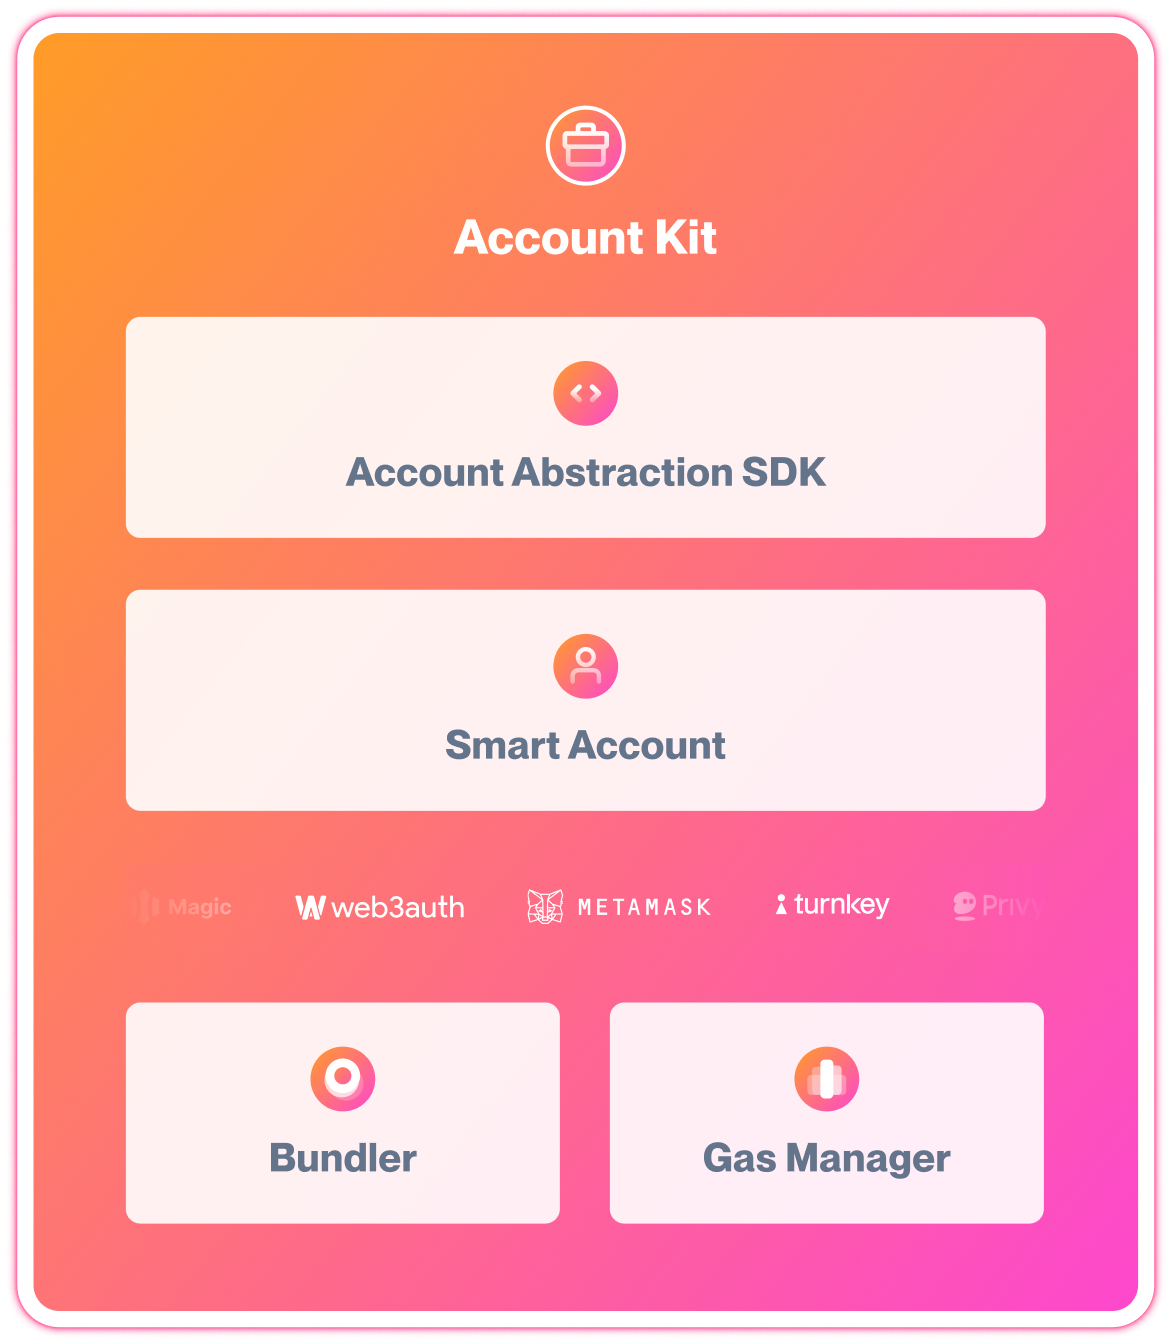 Account kit